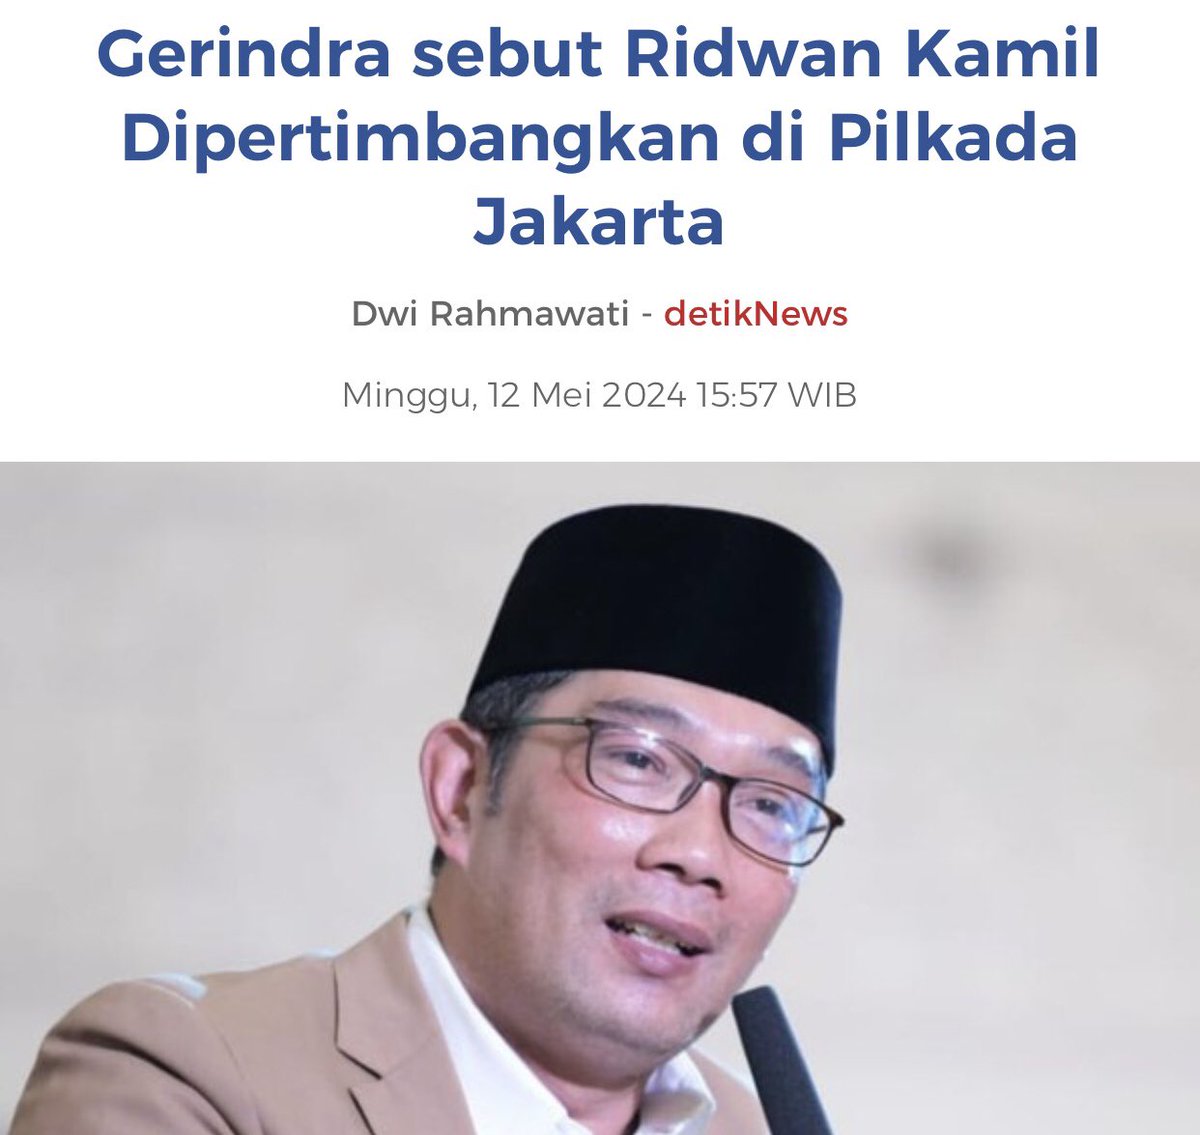 Gerindra sebut Ridwan Kamil Dipertimbangkan di Pilkada Jakarta GASKeun Kang @ridwankamil ...👍😍 dtk.id/NbNgA9